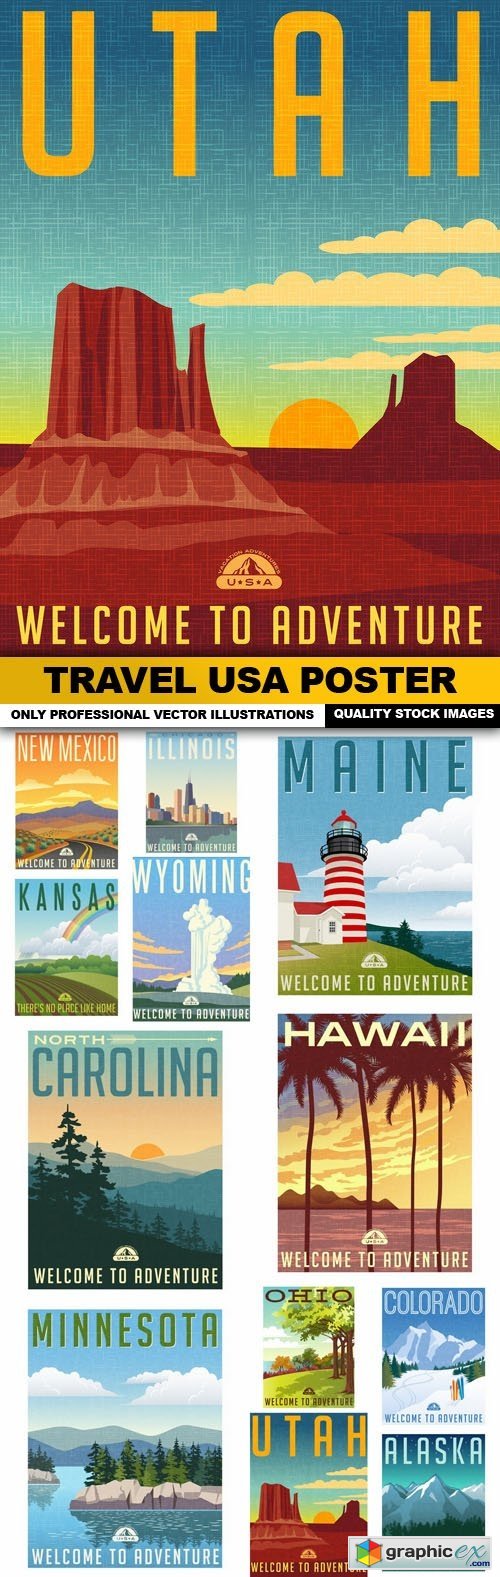 Travel USA Poster